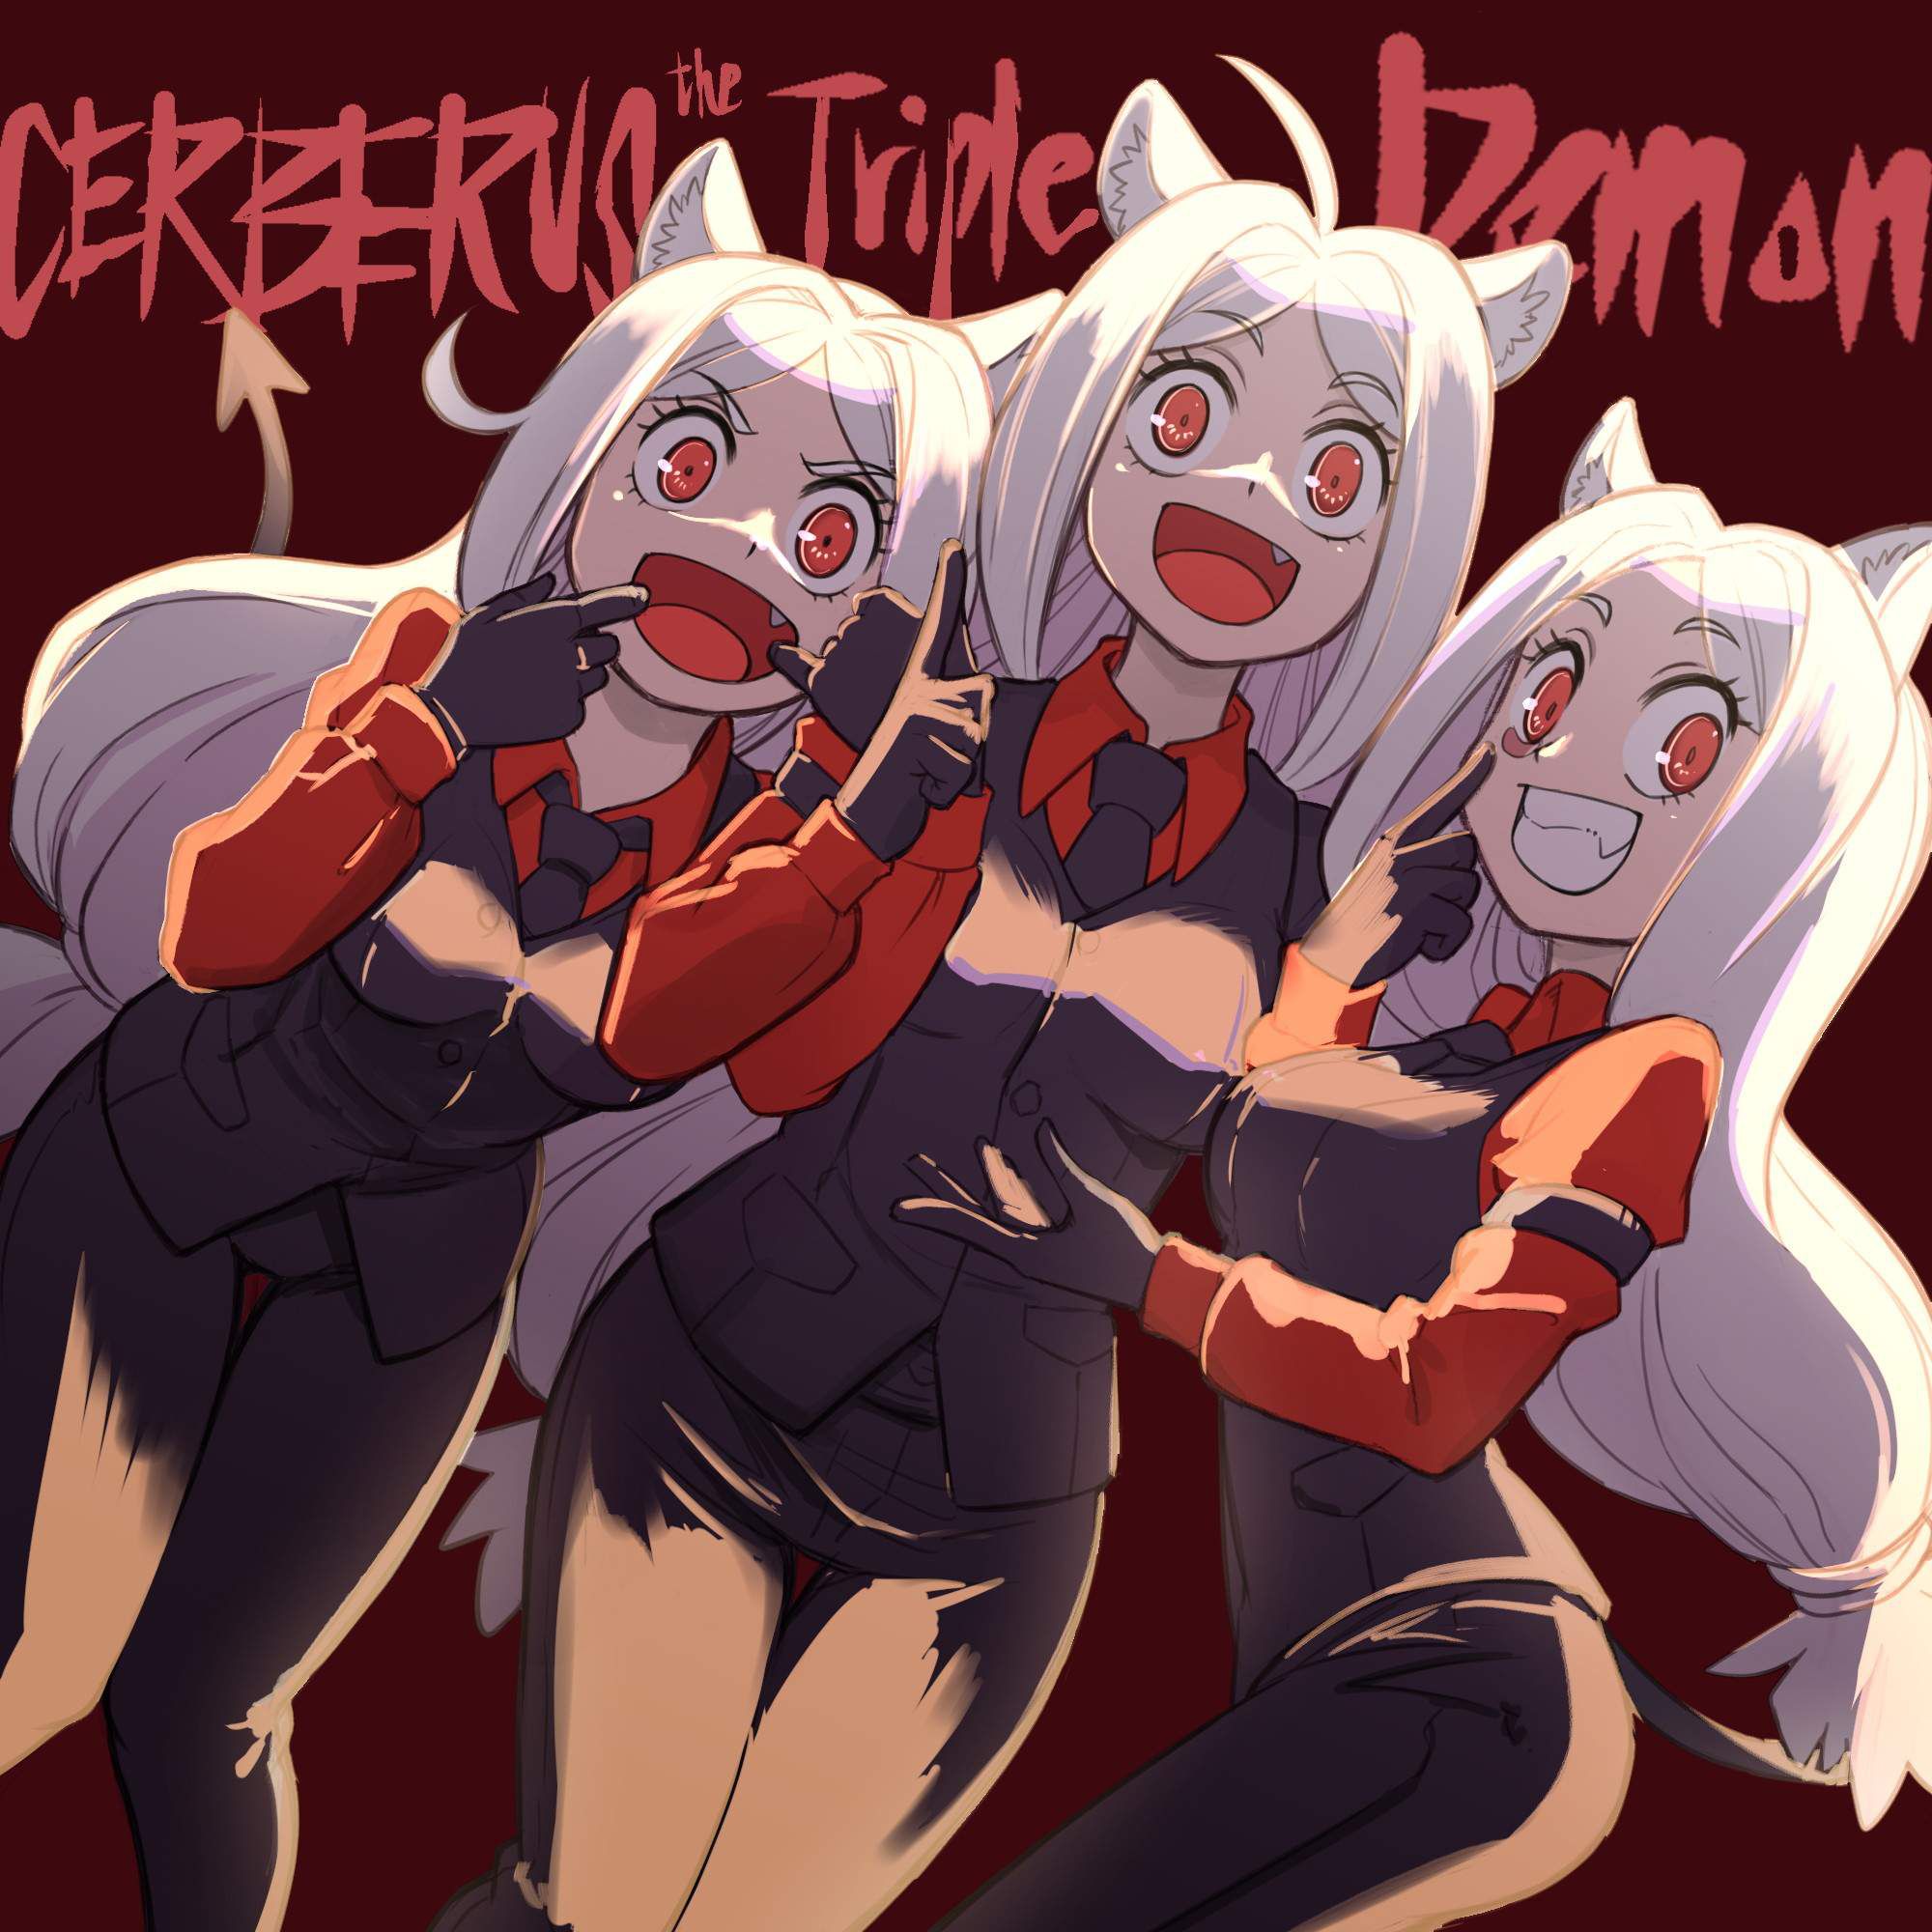 [Helltaker] erotic &amp; moe image of Cerberus of the triplet devil ★ 8